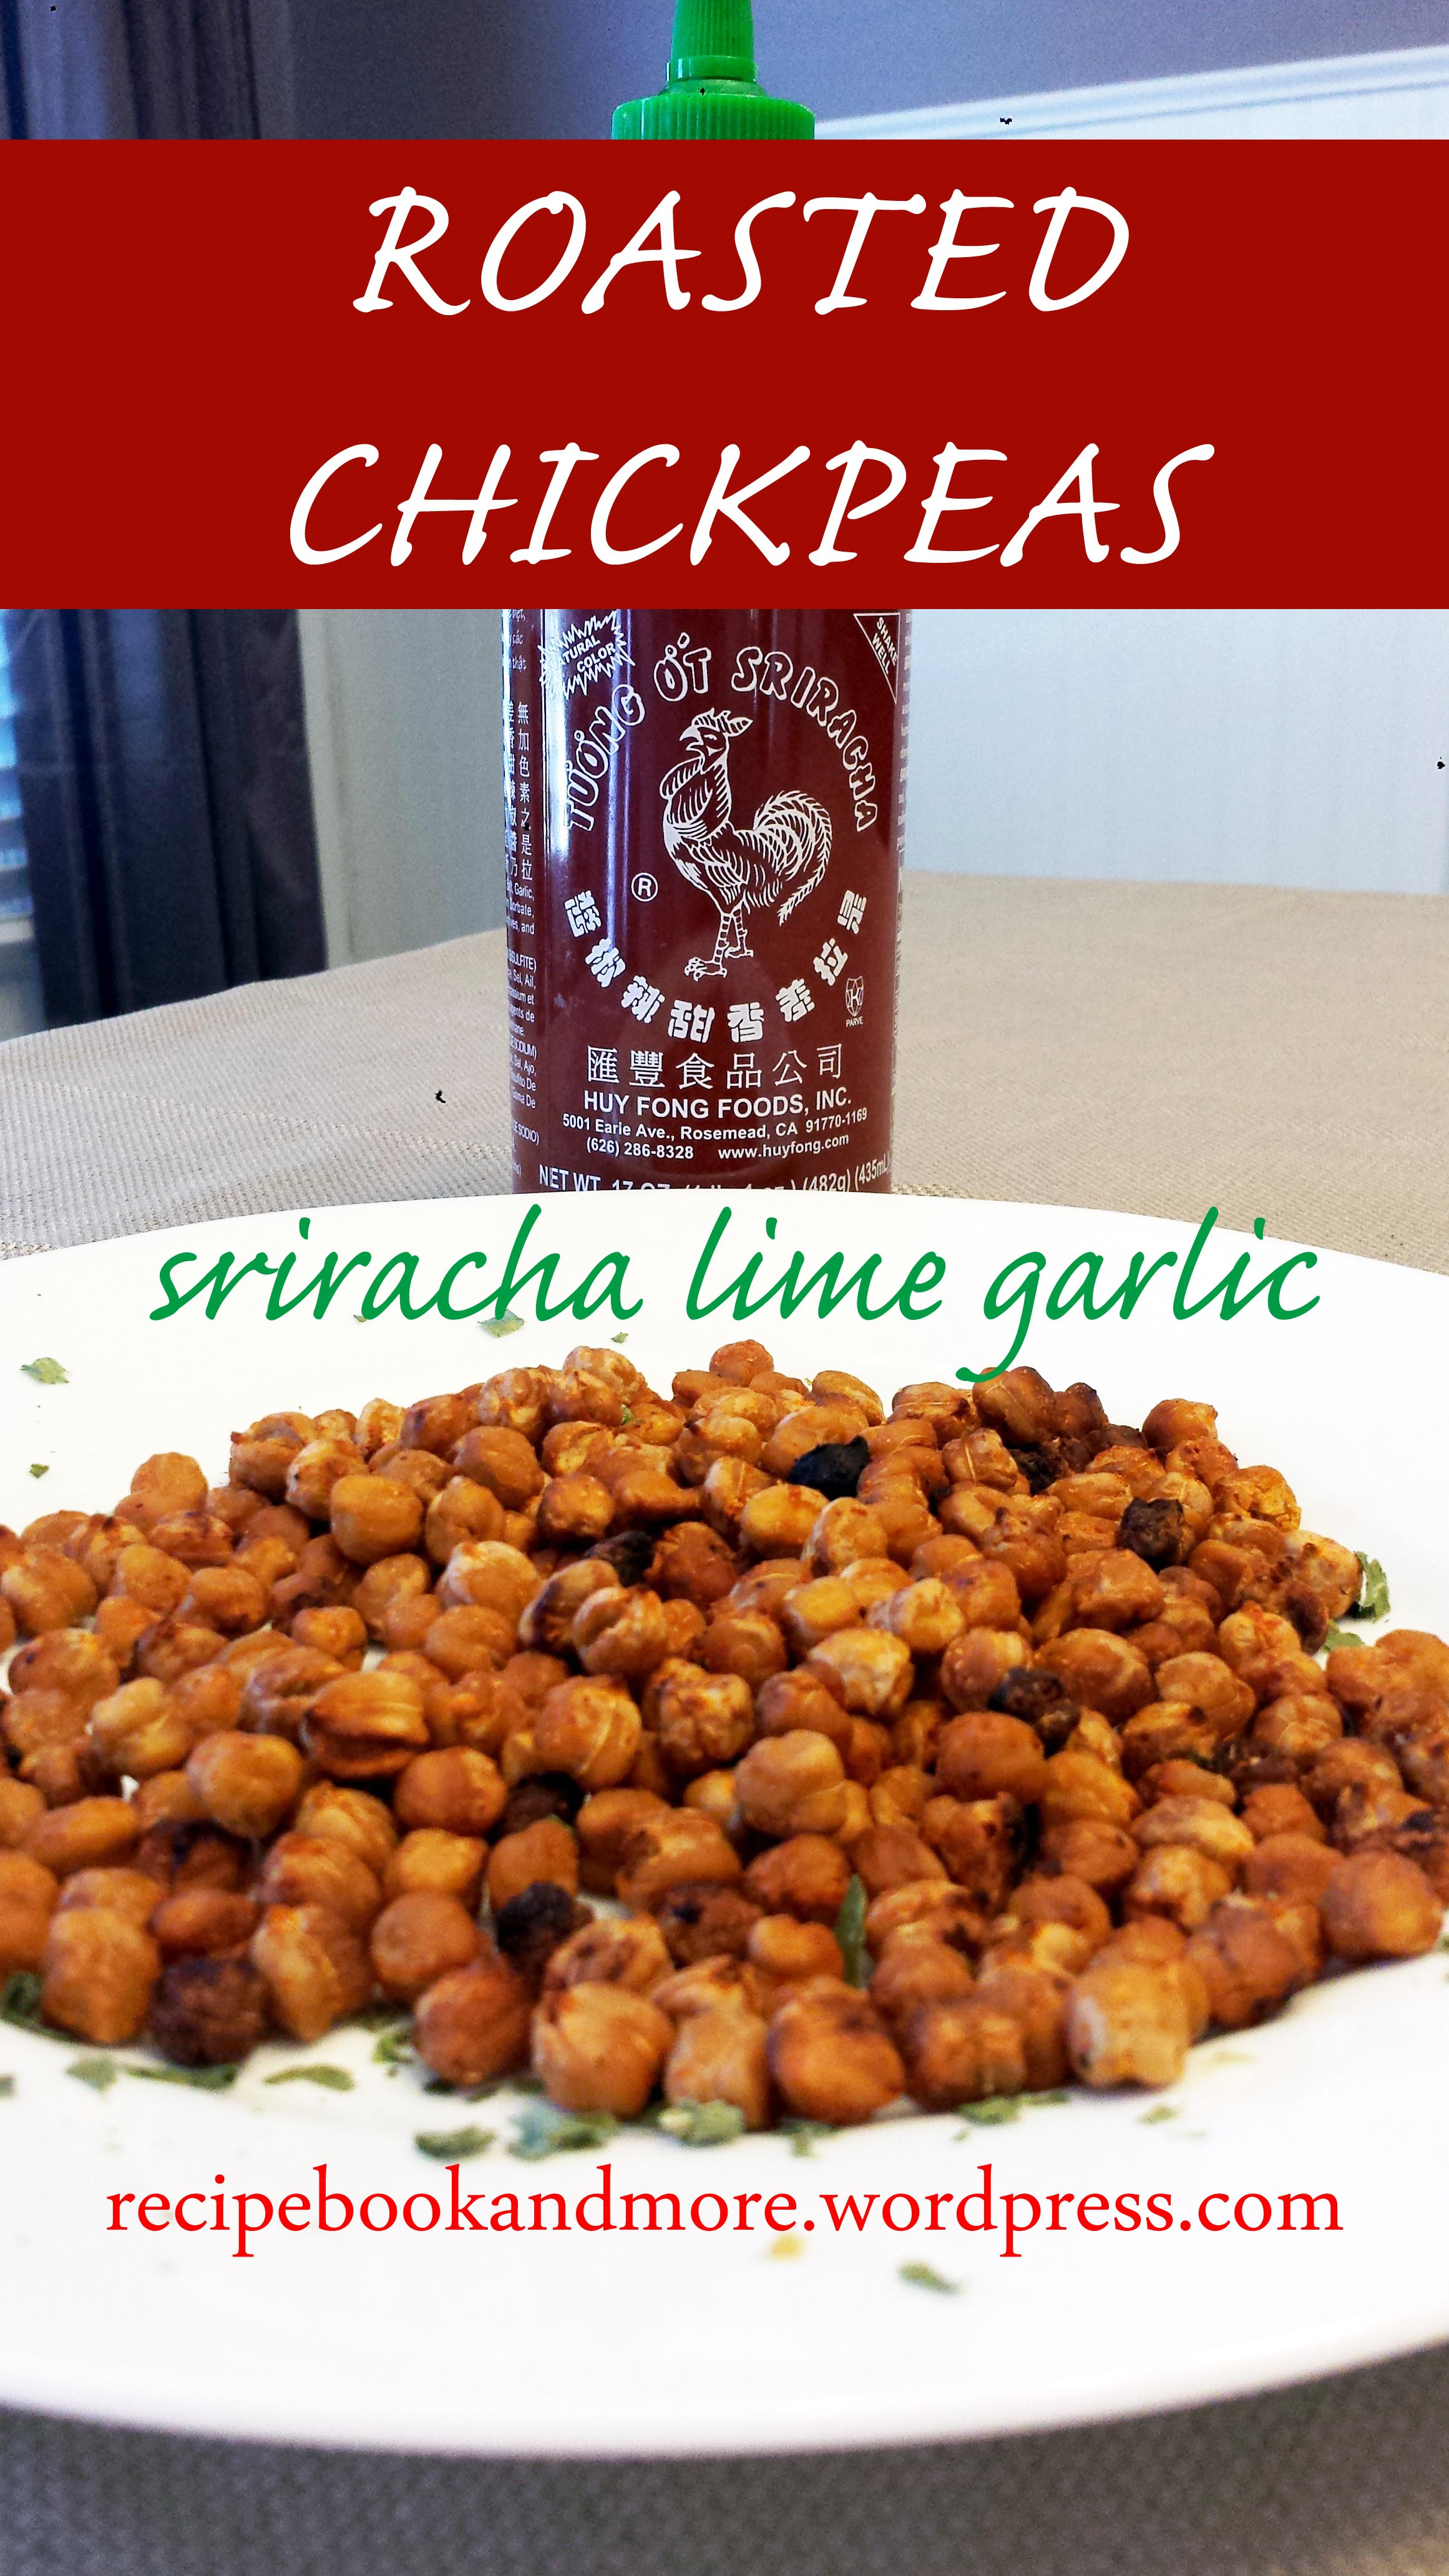 Low Fat Healthy Snacks
 Sriracha Lime Garlic Roasted Chickpeas